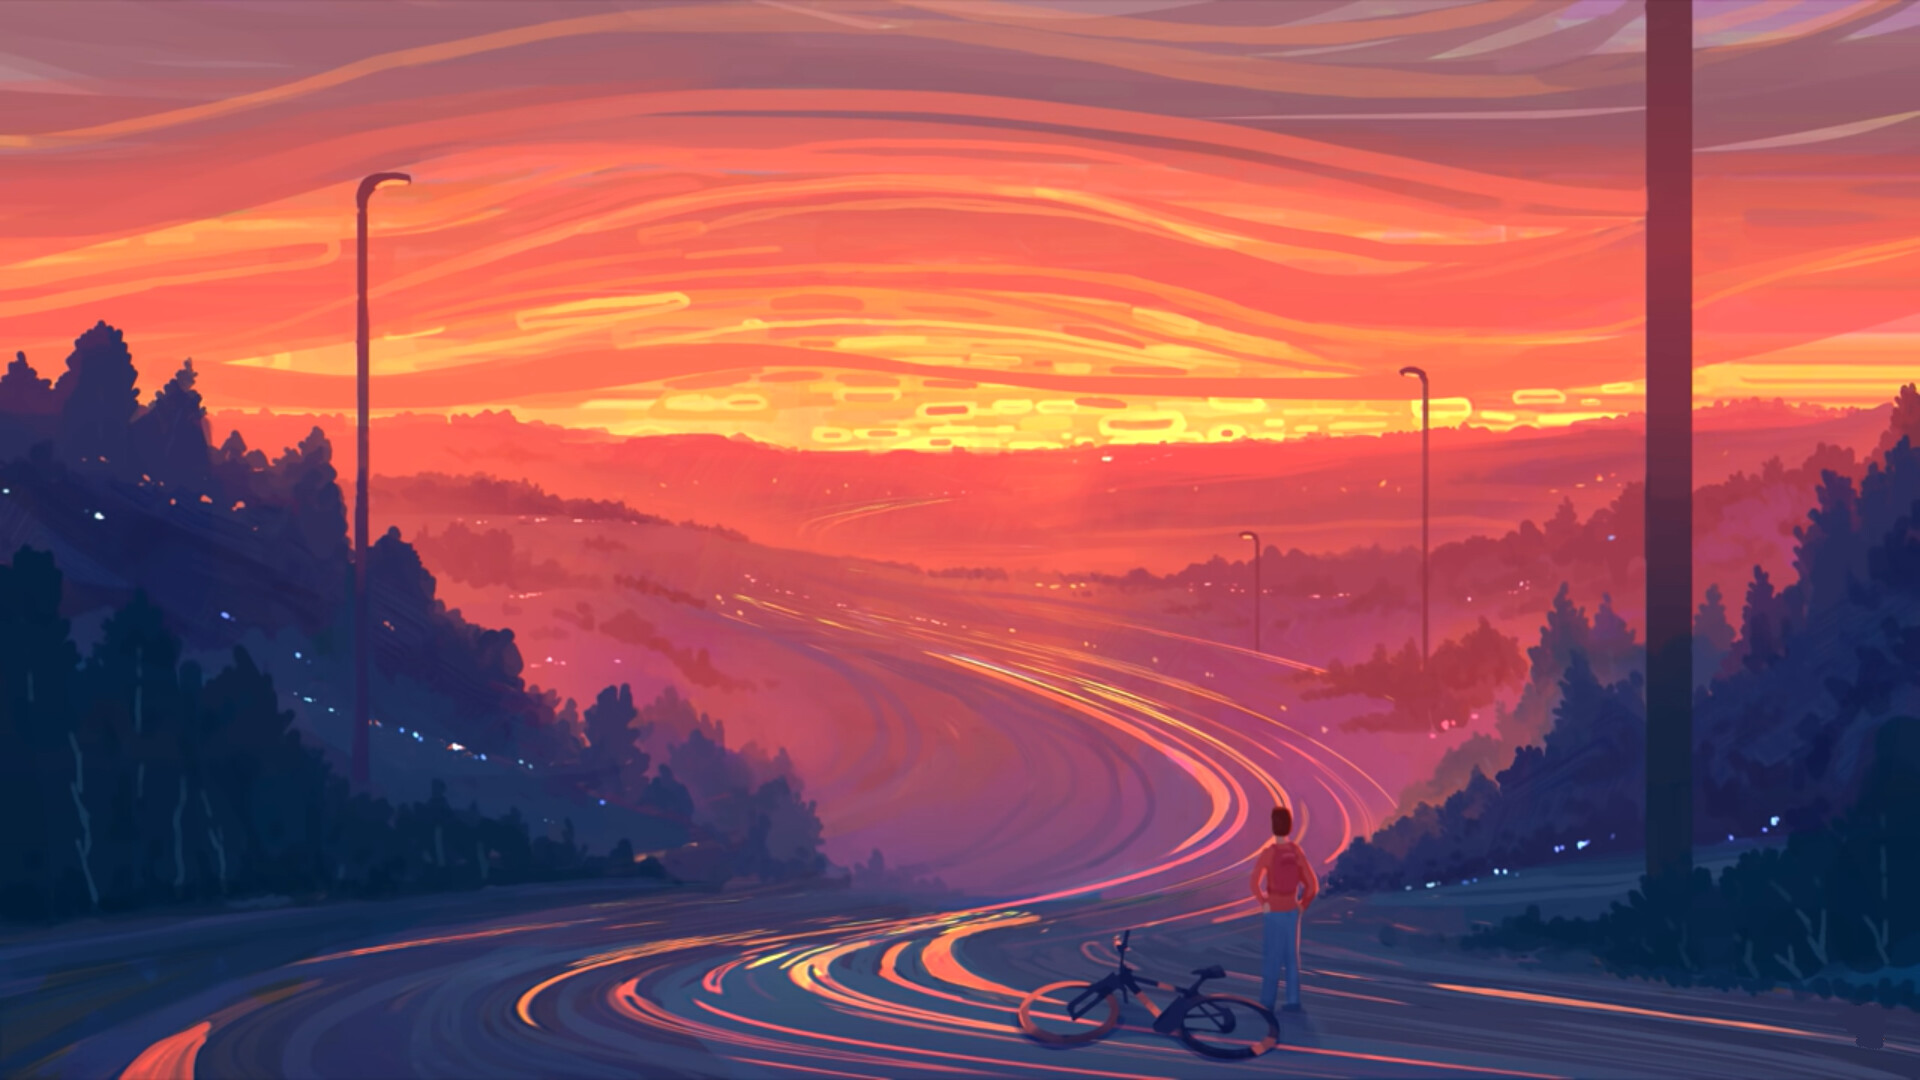 Sunset: Evening, Orange-reddish color skies, Cityscape. 1920x1080 Full HD Wallpaper.